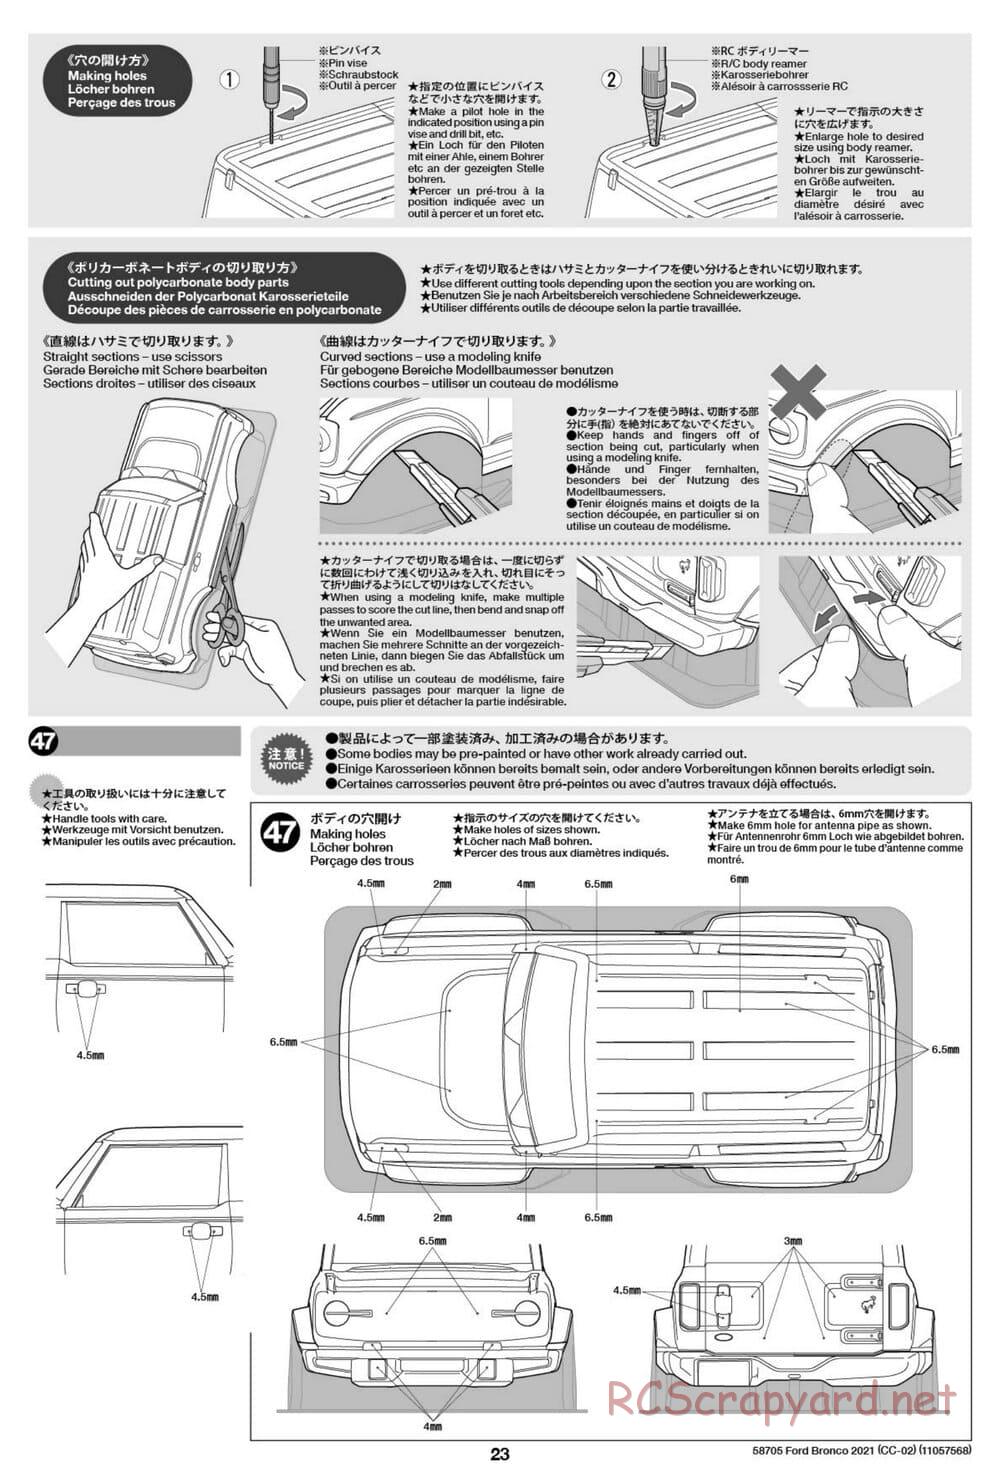 Tamiya - Ford Bronco 2021 - CC-02 Chassis - Manual - Page 23